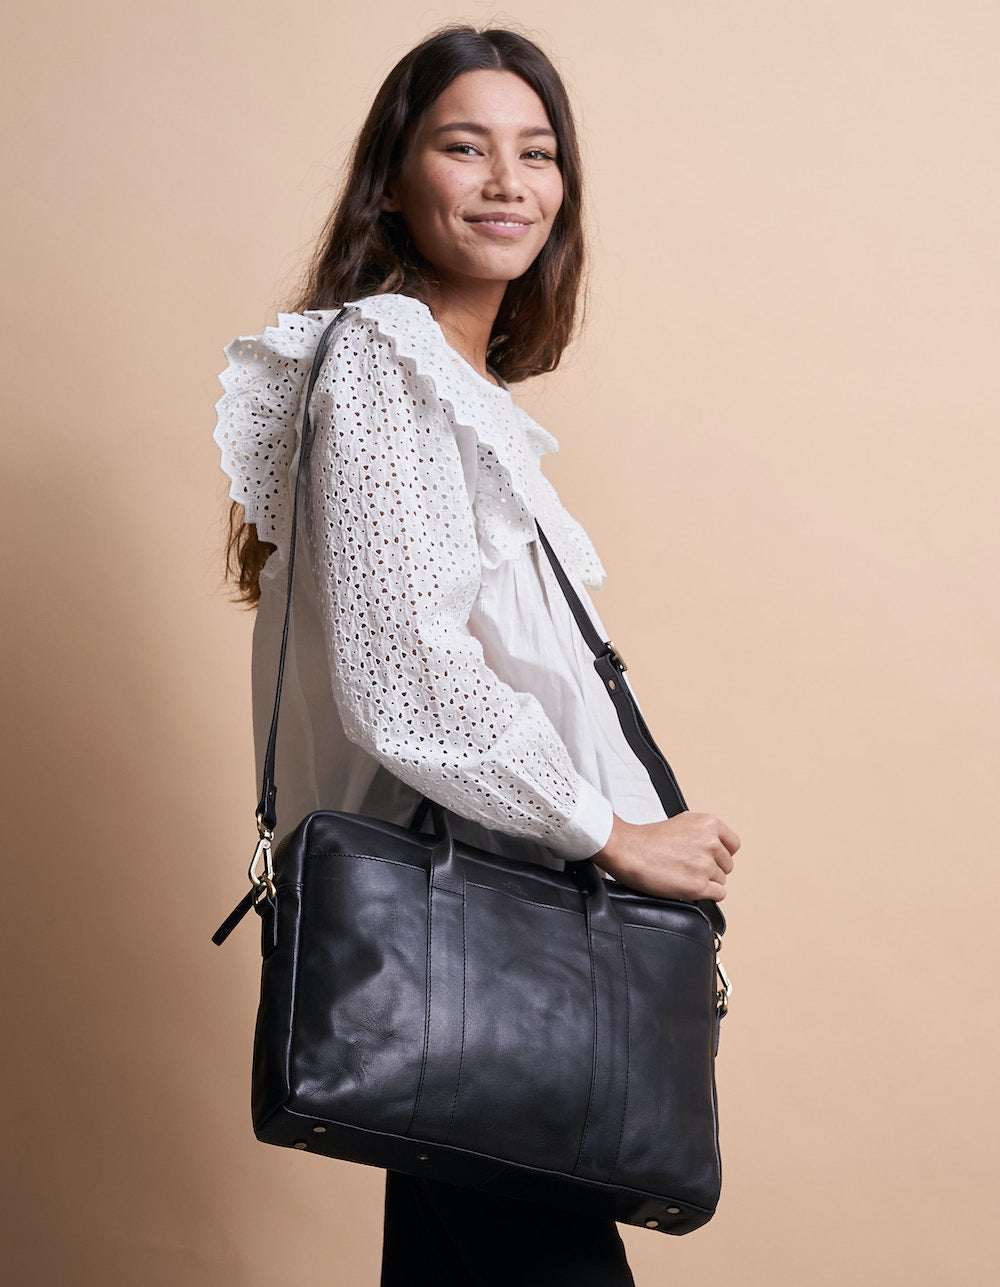 Black Leather business bag. Model product image.